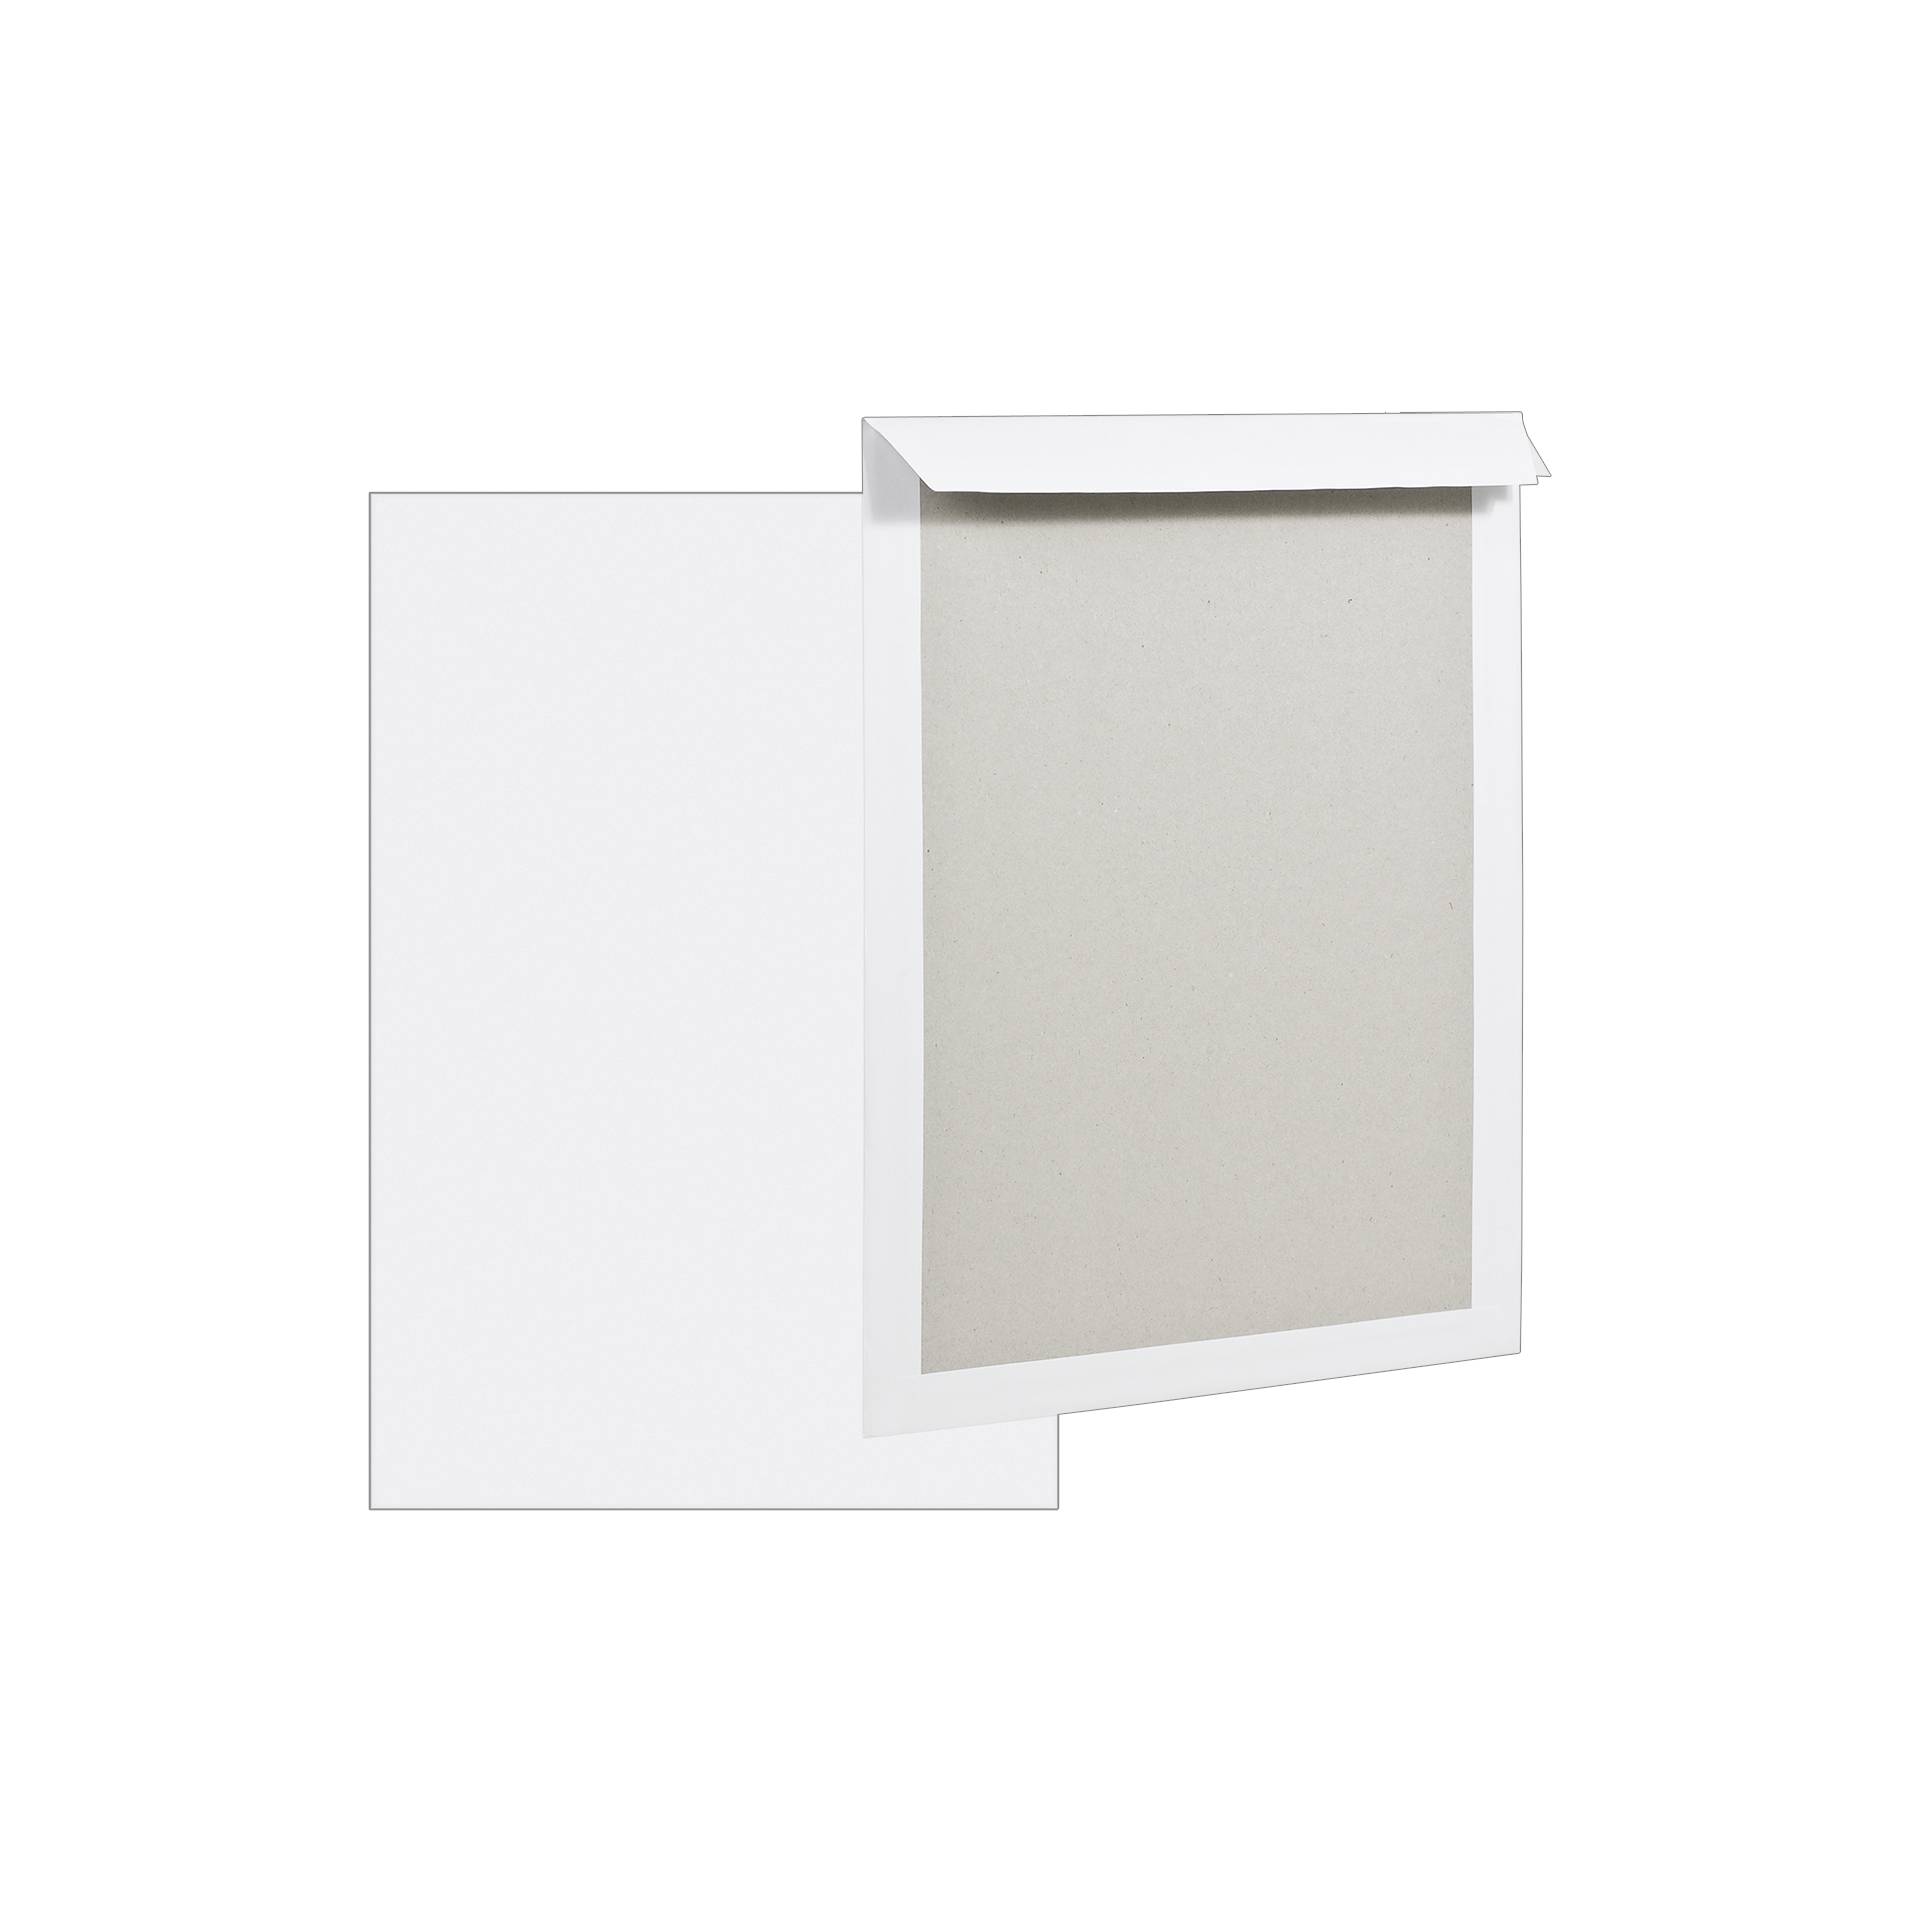 1x100 envelope cardboard back C3 324 x 457 mm white o.F. 120